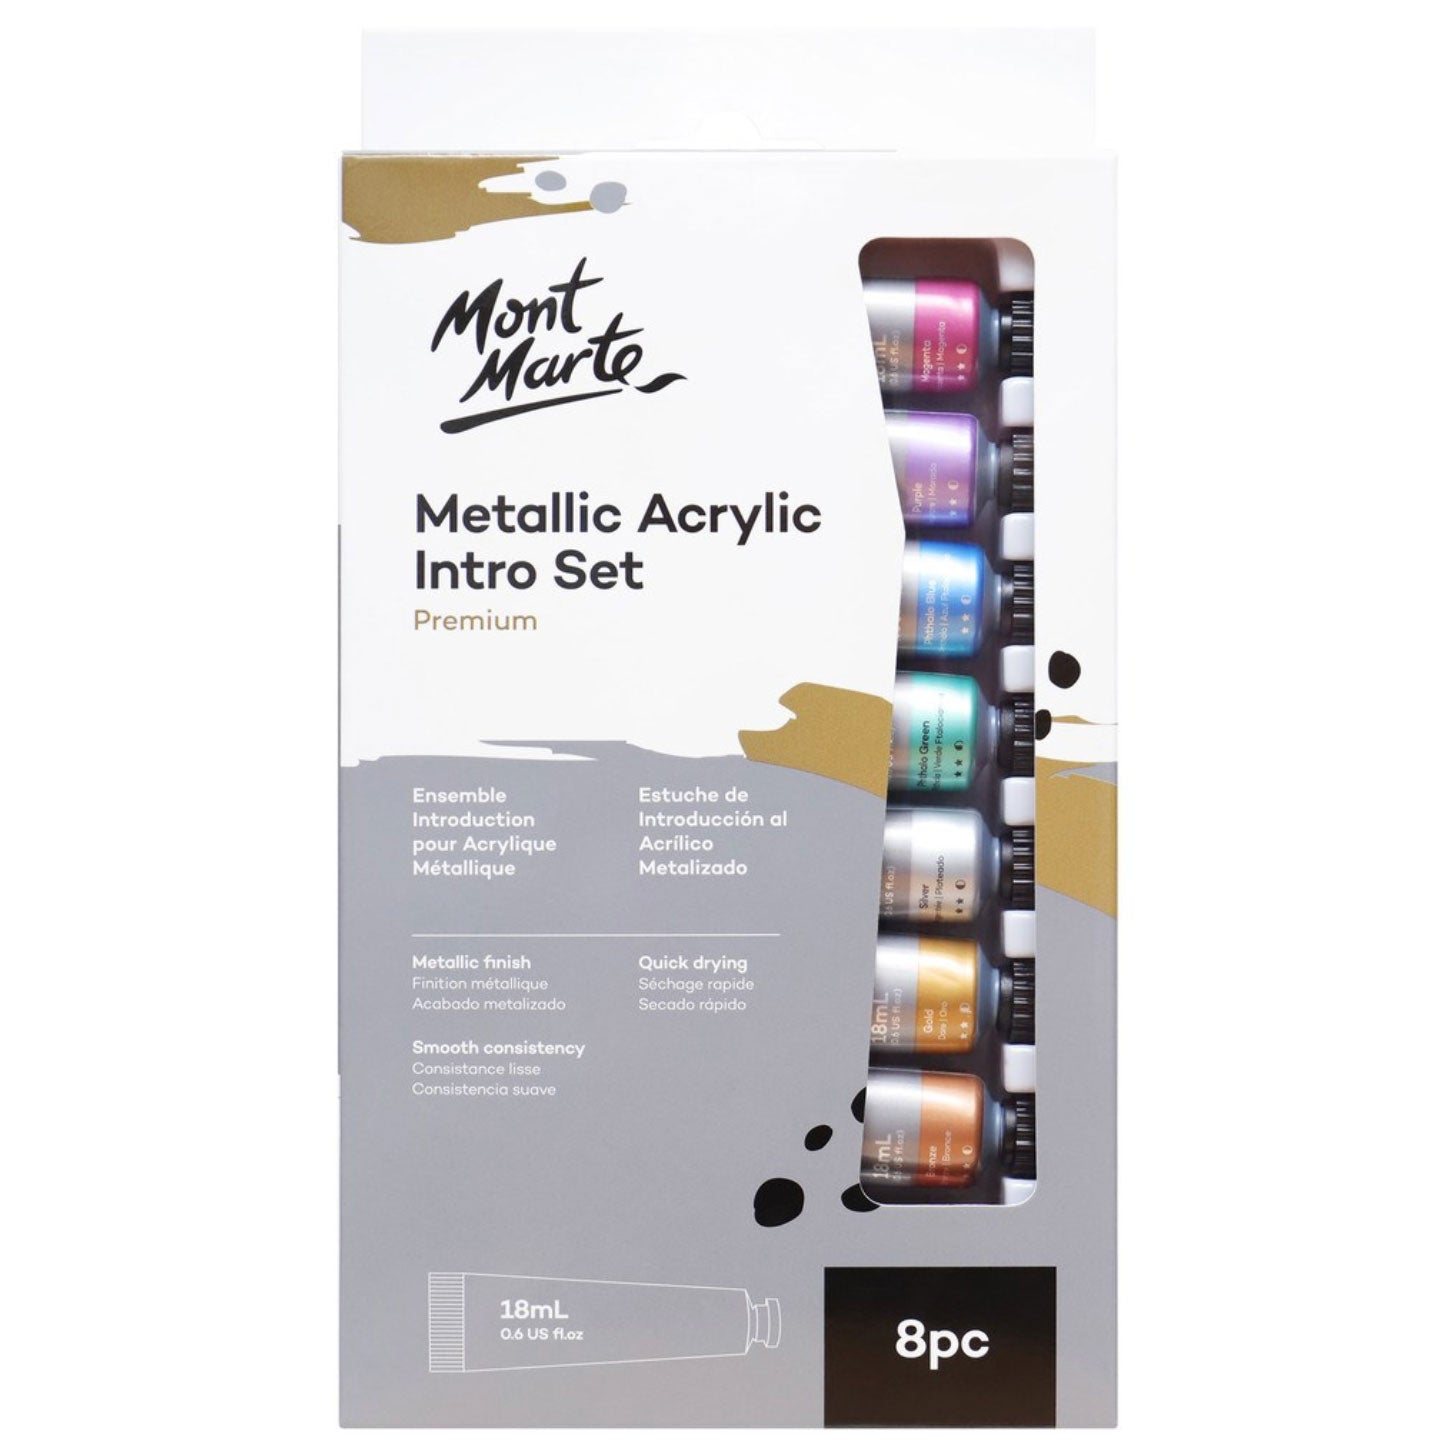 Mont Marte Metallic Acrylic Intro Set Premium